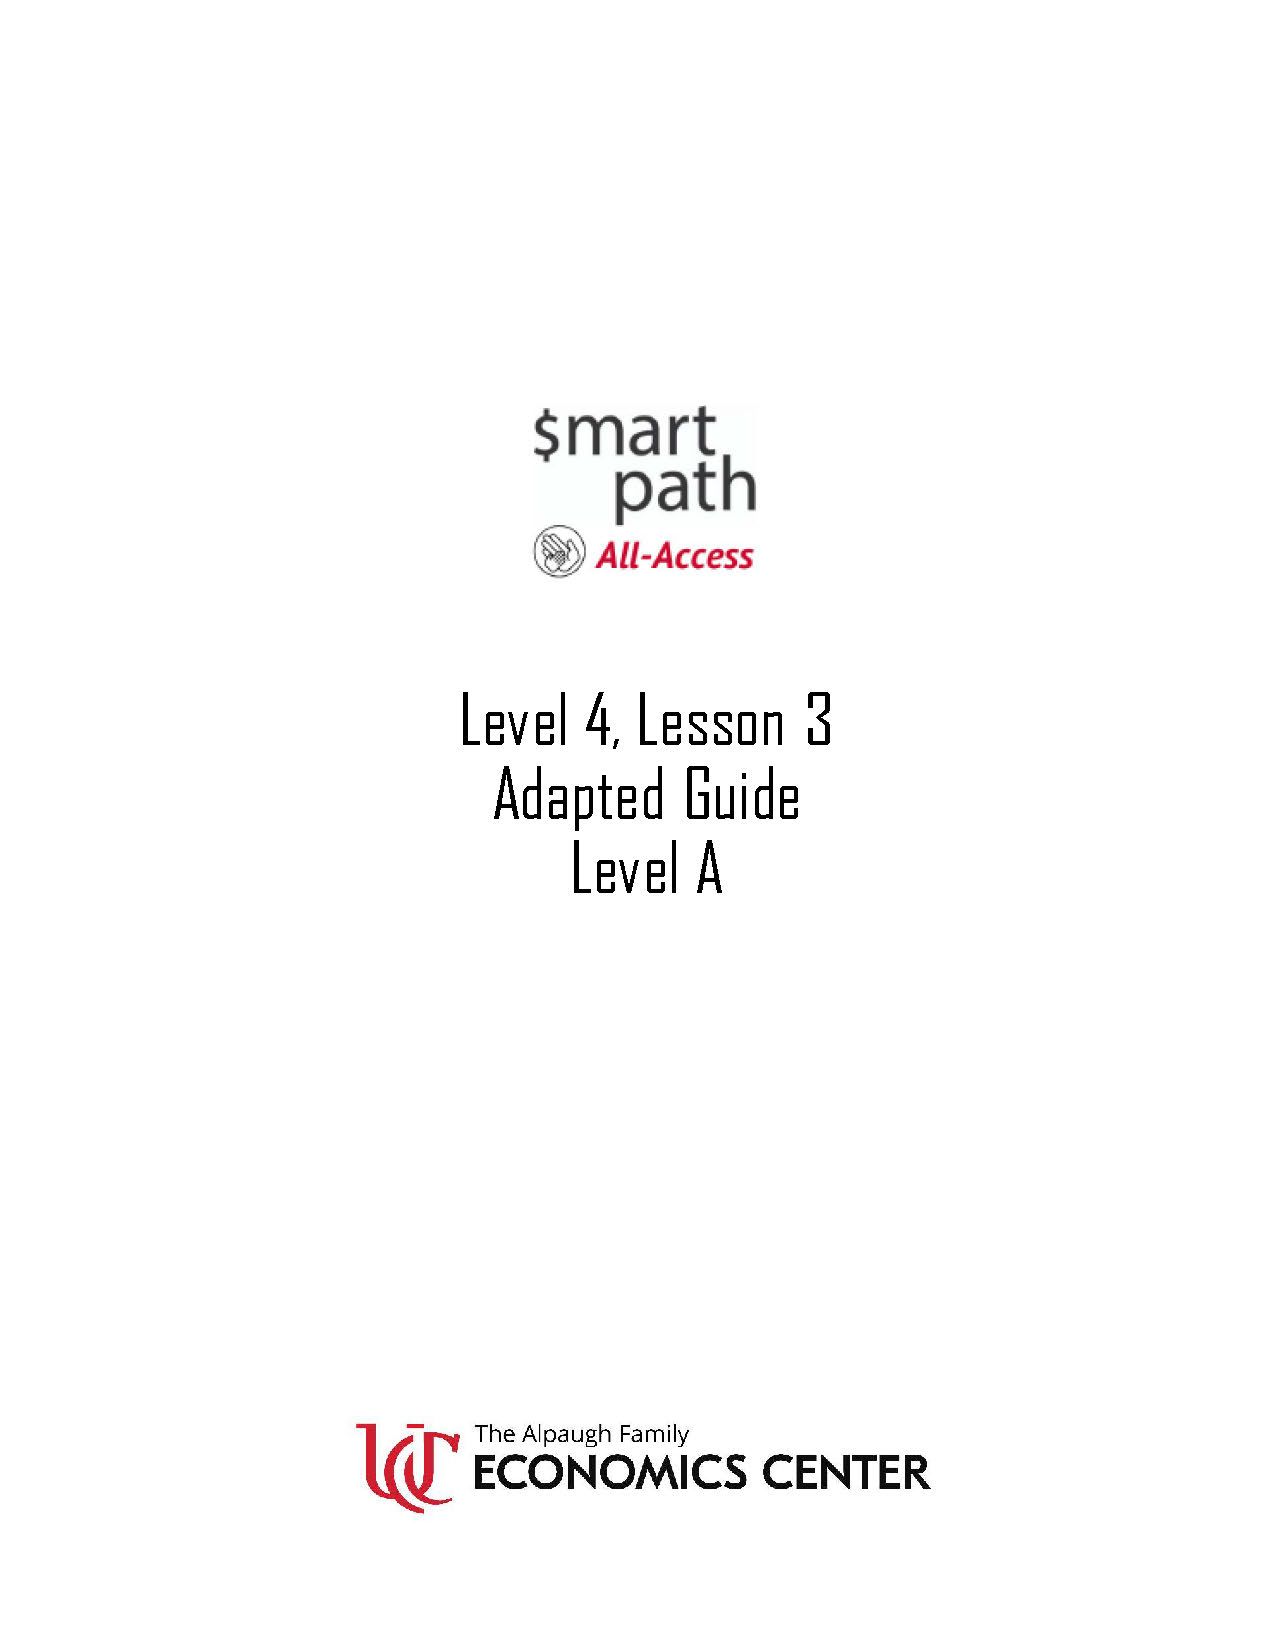 Level 4 lesson 3 cover